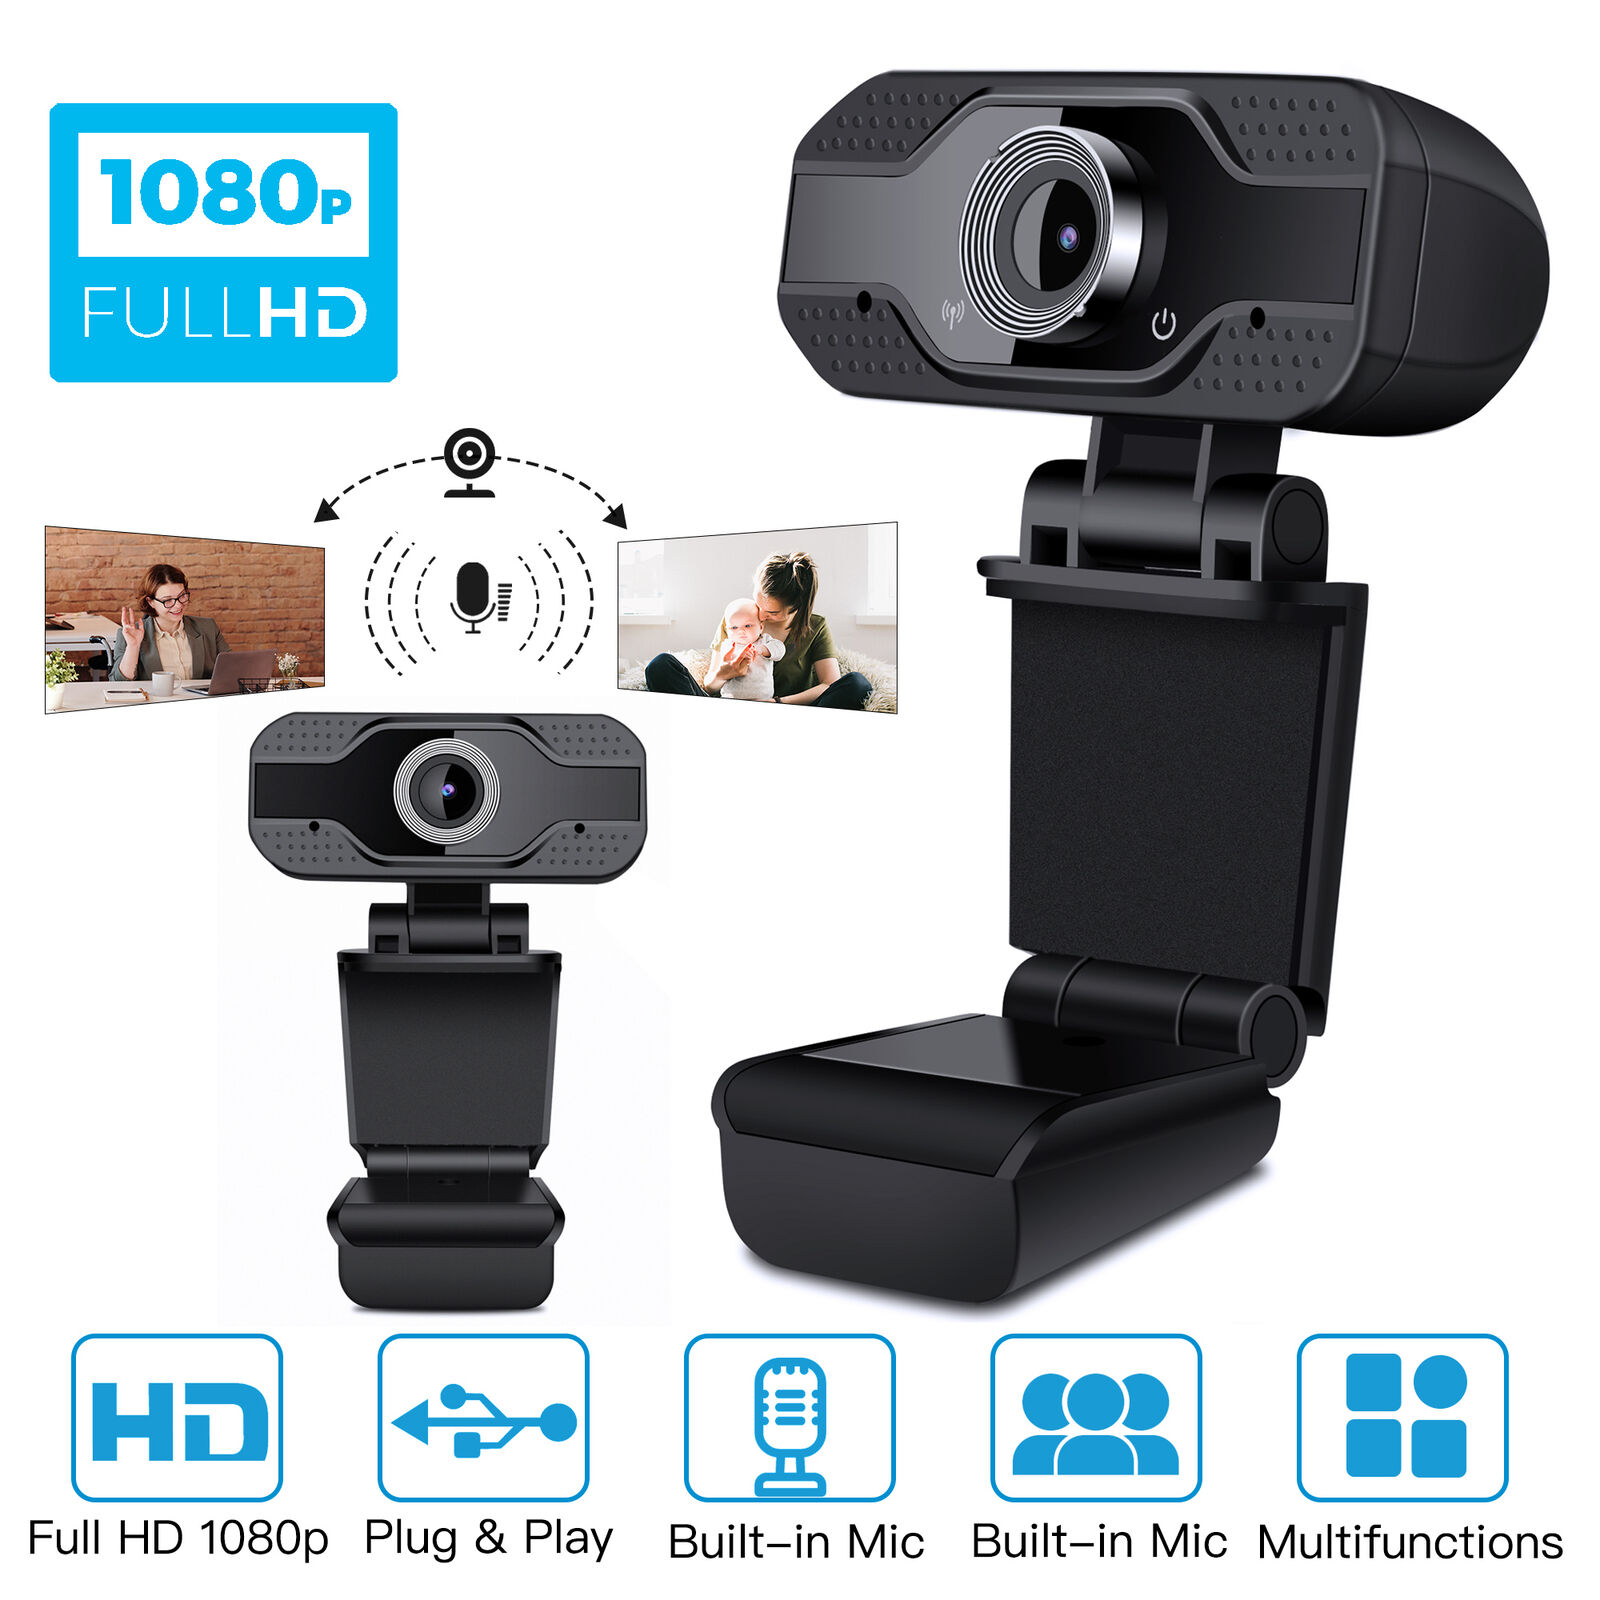 1080P HD Webcam Auto Focusing Web Camera For PC Laptop Desktop With Microphone